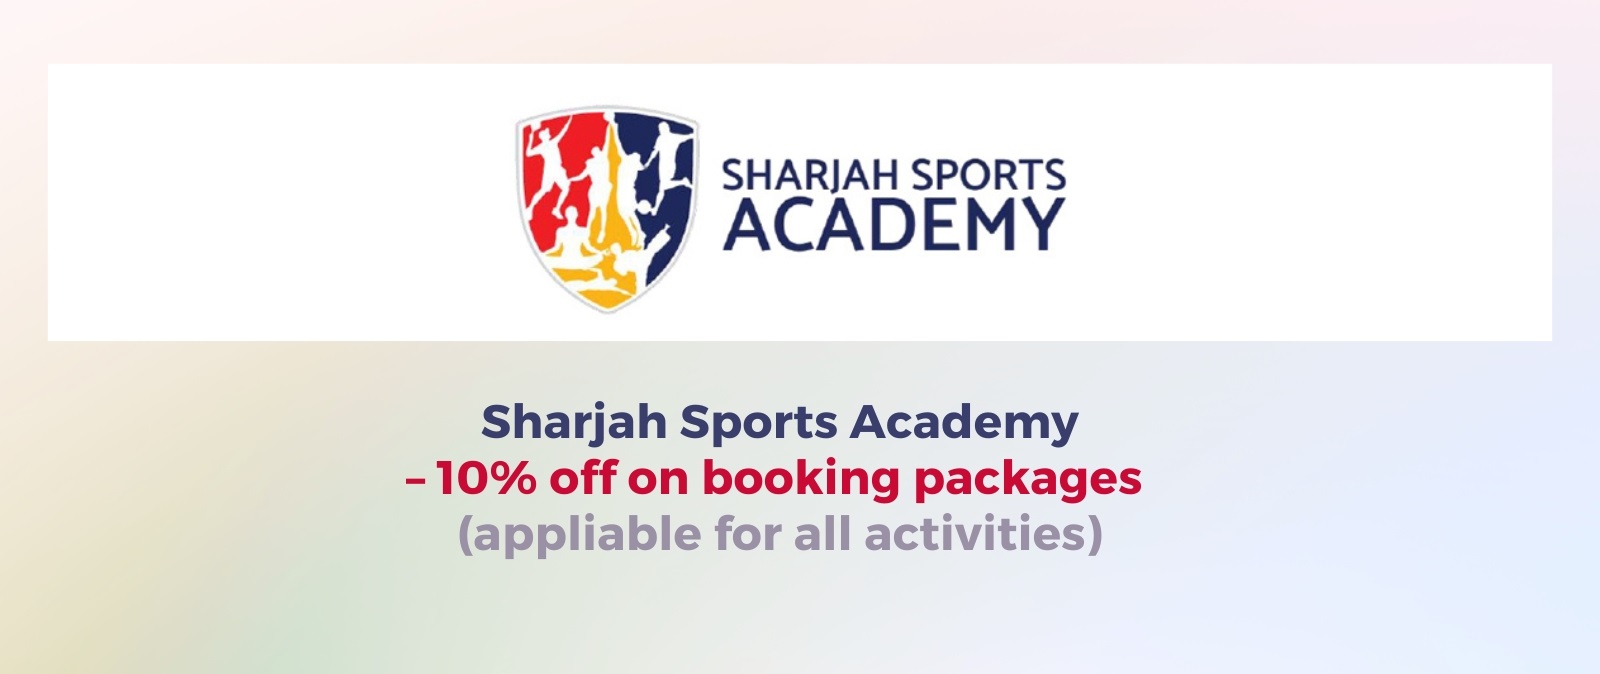 Sharjah Sports Academy